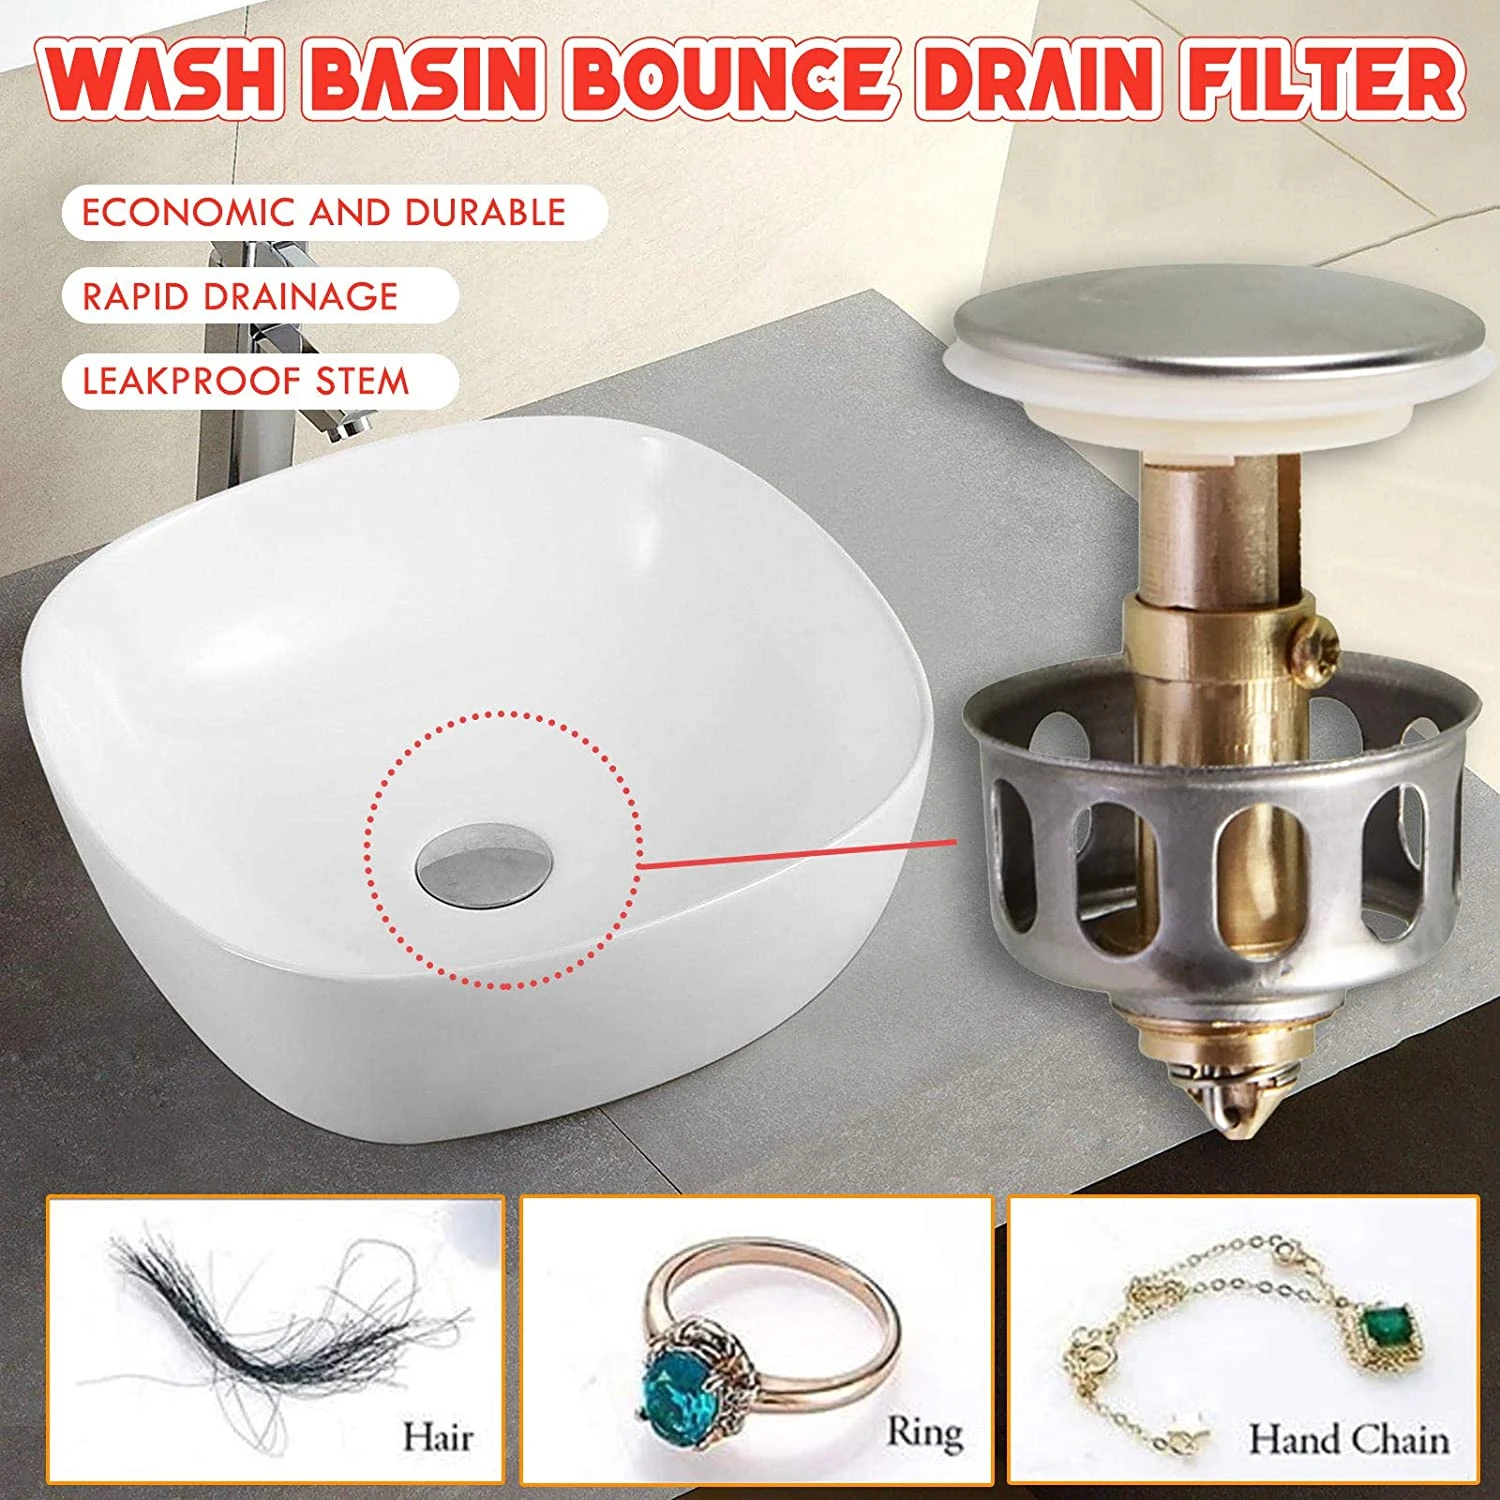 Universal Home Kitchen Wash Strainer Basin Bounce Sink Drain